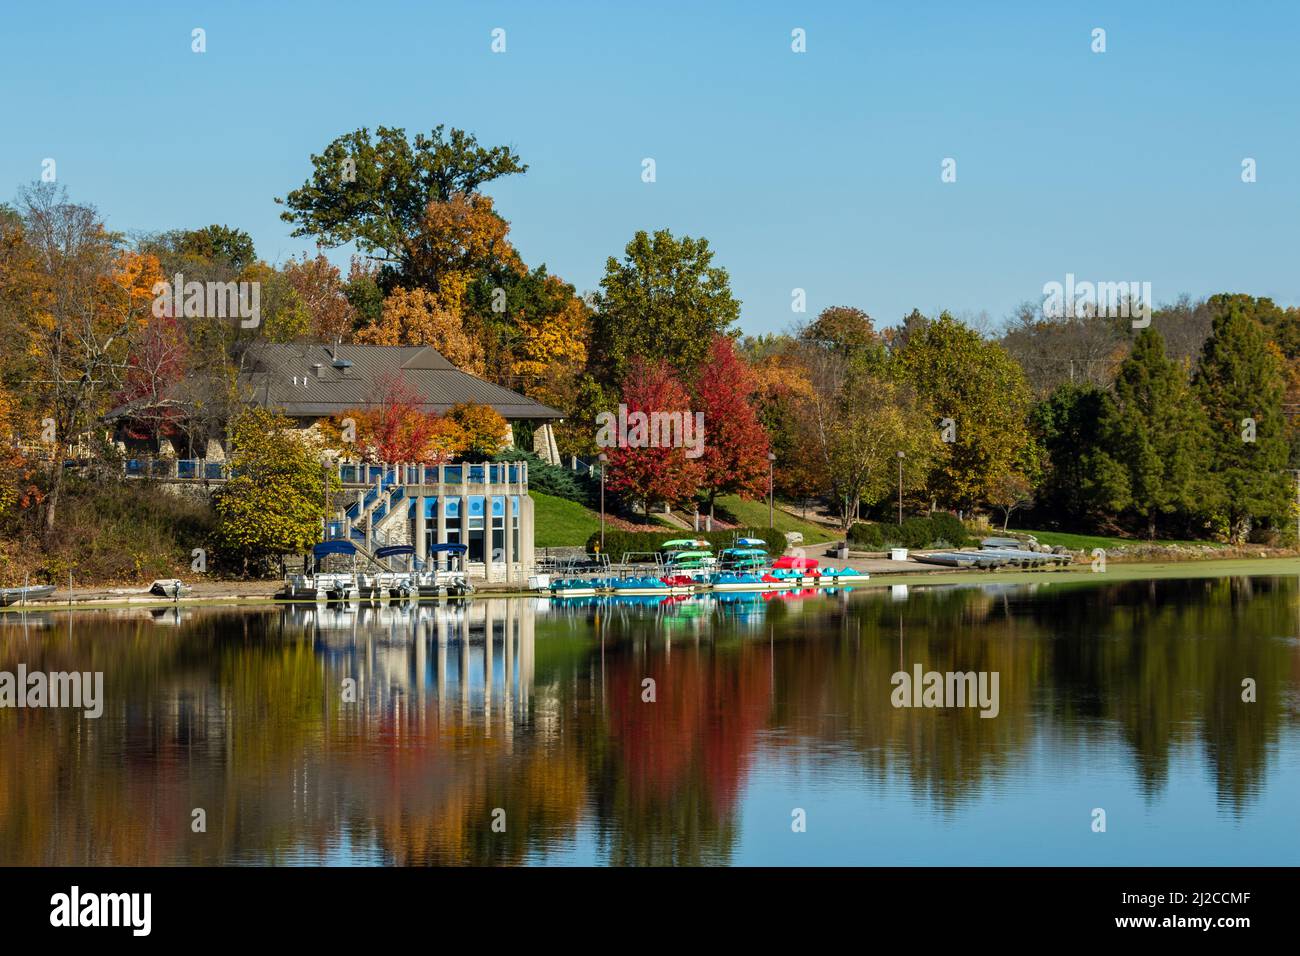 Autumn trees and color at Sharon Lake and Sharon Woods Boathouse. Sharon Woods Metro Park, Sharonville, Cincinnati, Ohio, USA. Stock Photo